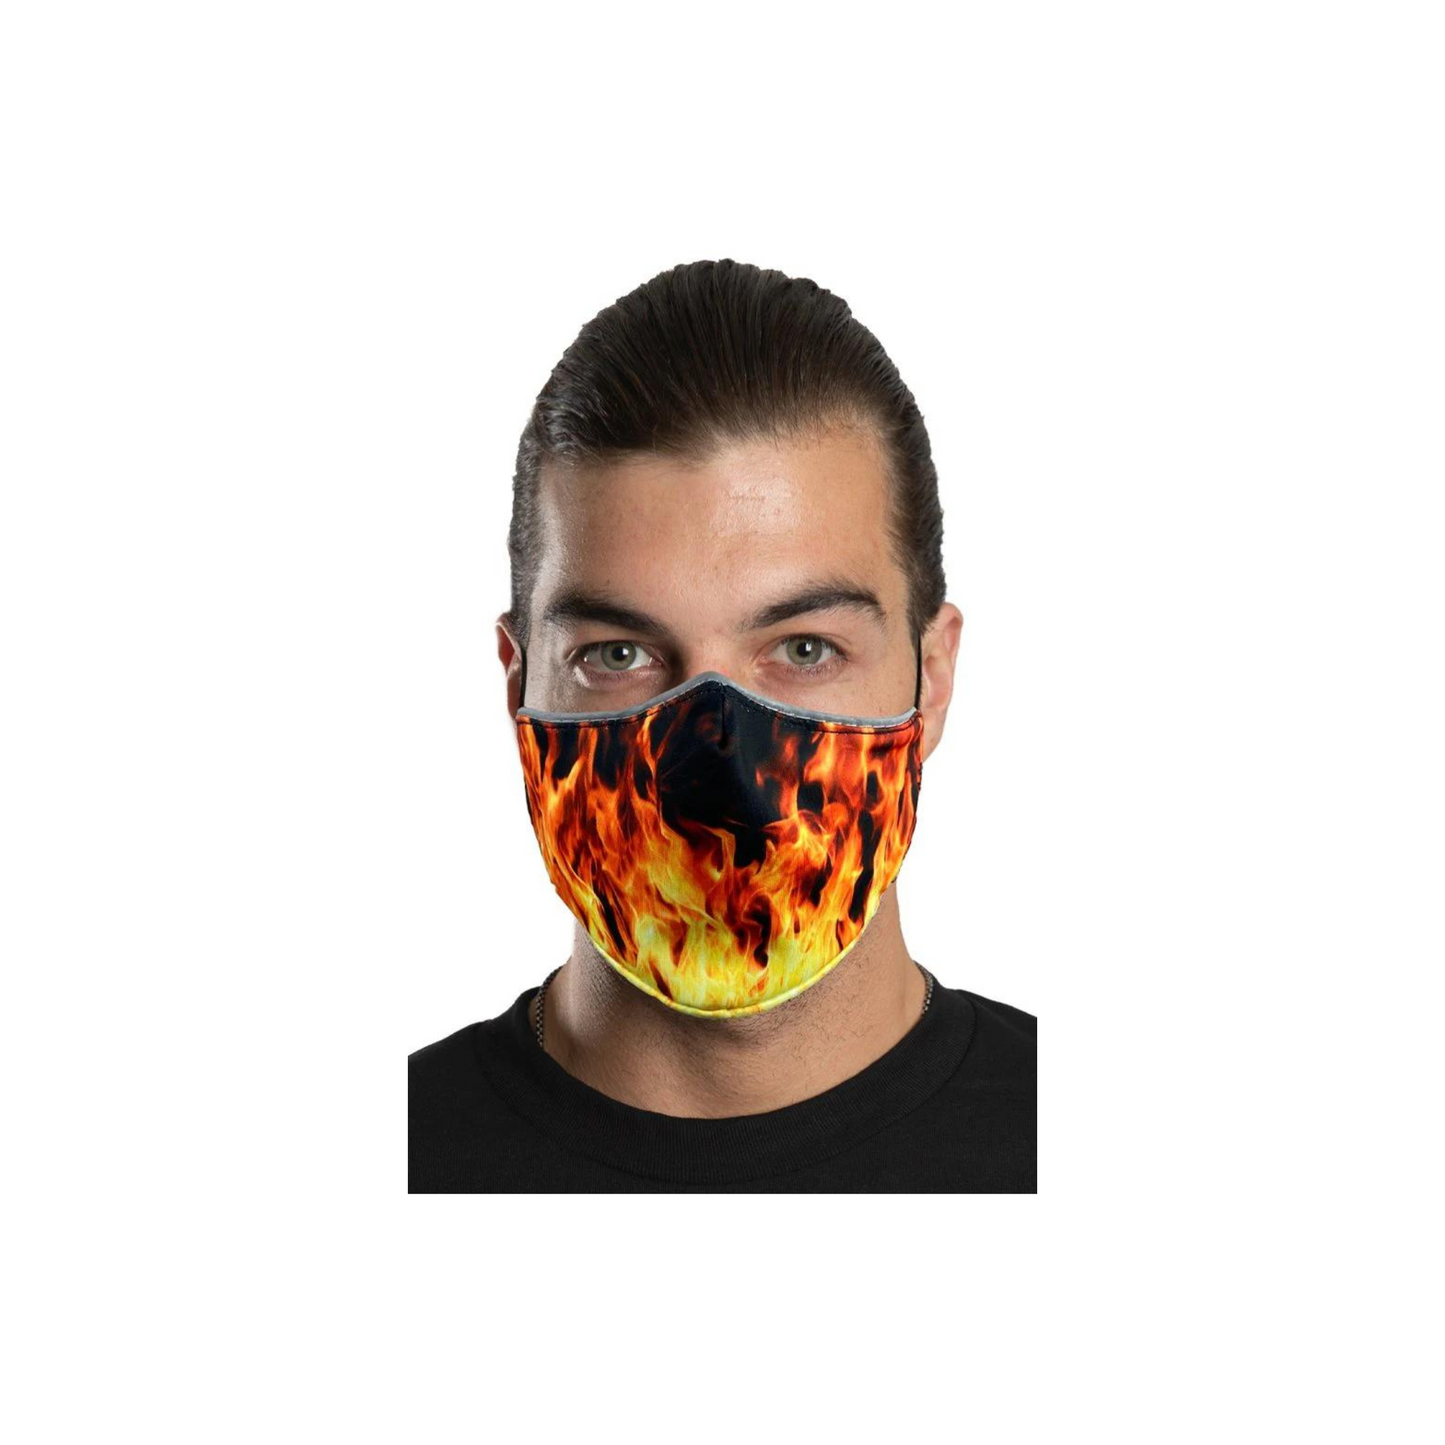 Hair Glove® Flames Face Mask Set